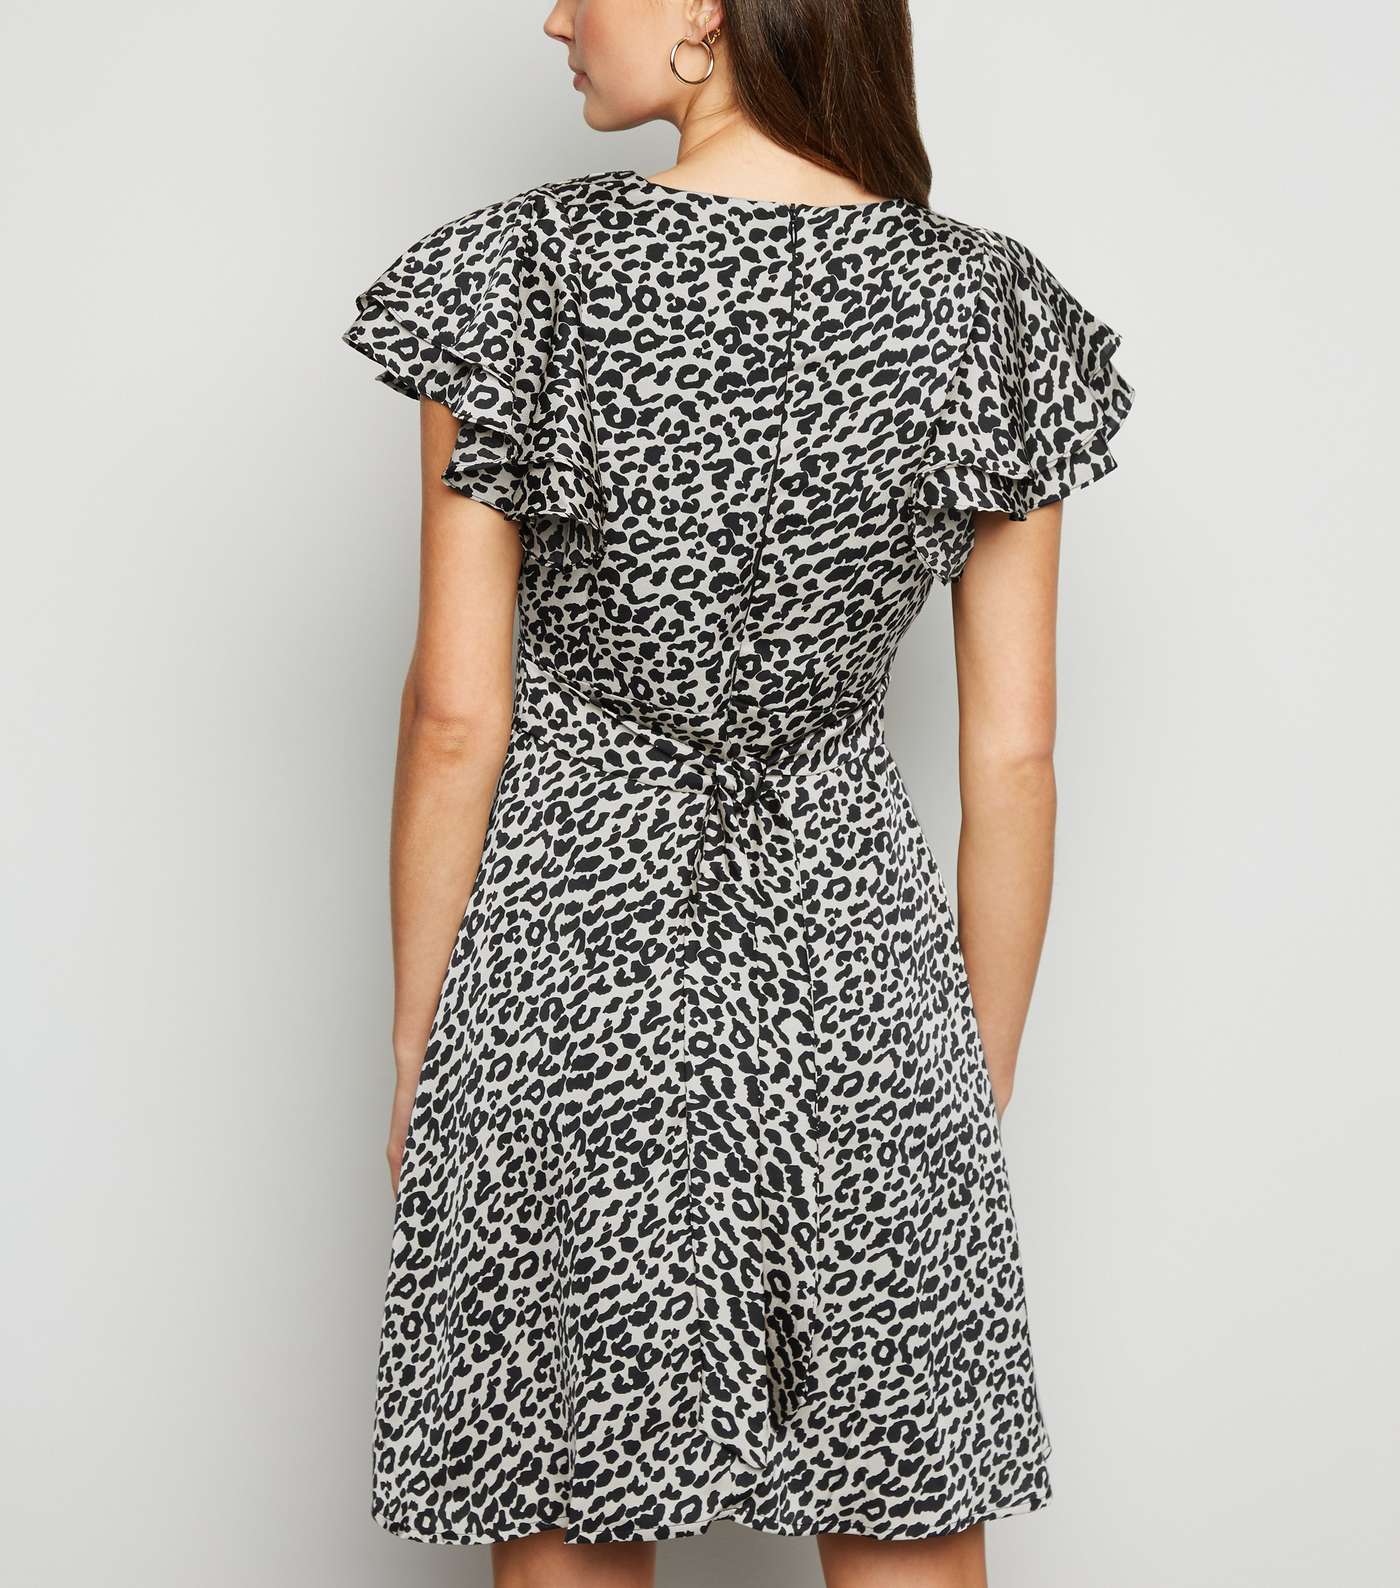 Blue Vanilla Off White Leopard Print Dress Image 3